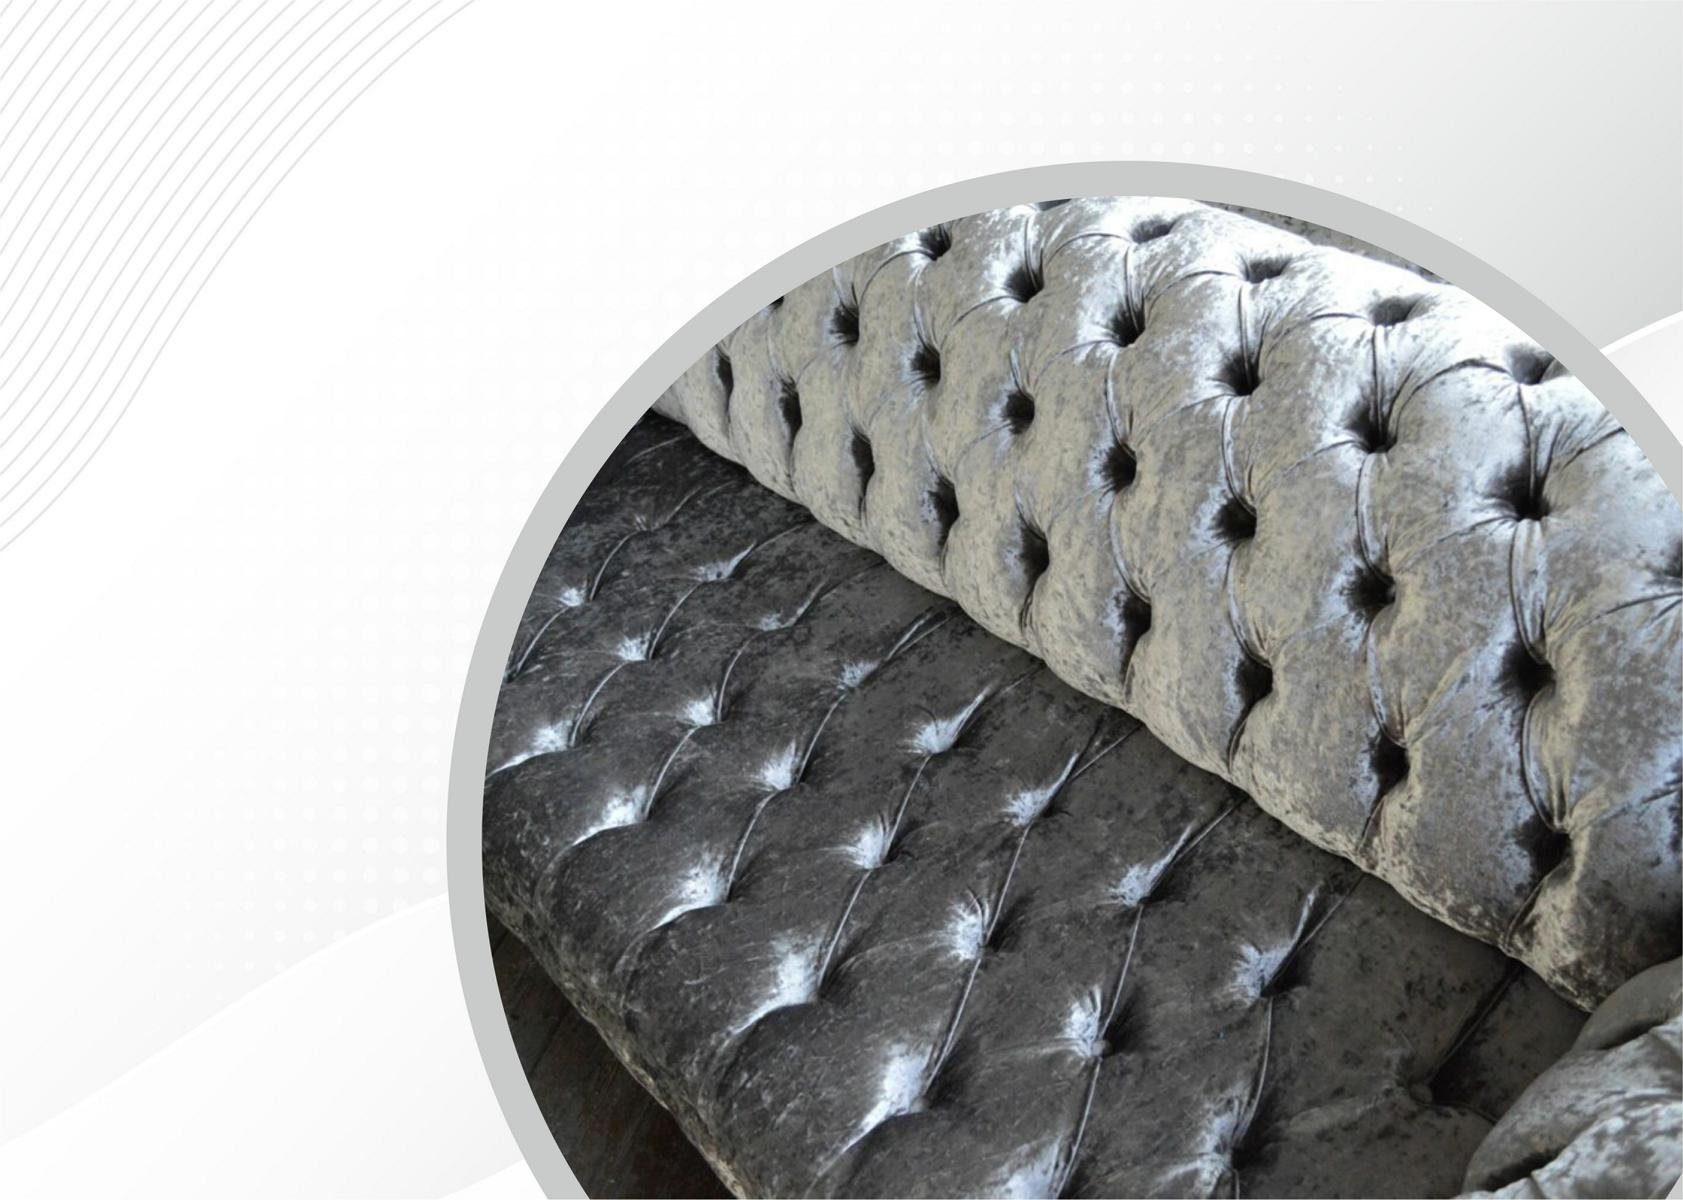 JVmoebel Chesterfield-Sofa, Chesterfield 3 Sitzer Couch Sofa Design cm Sofa 225